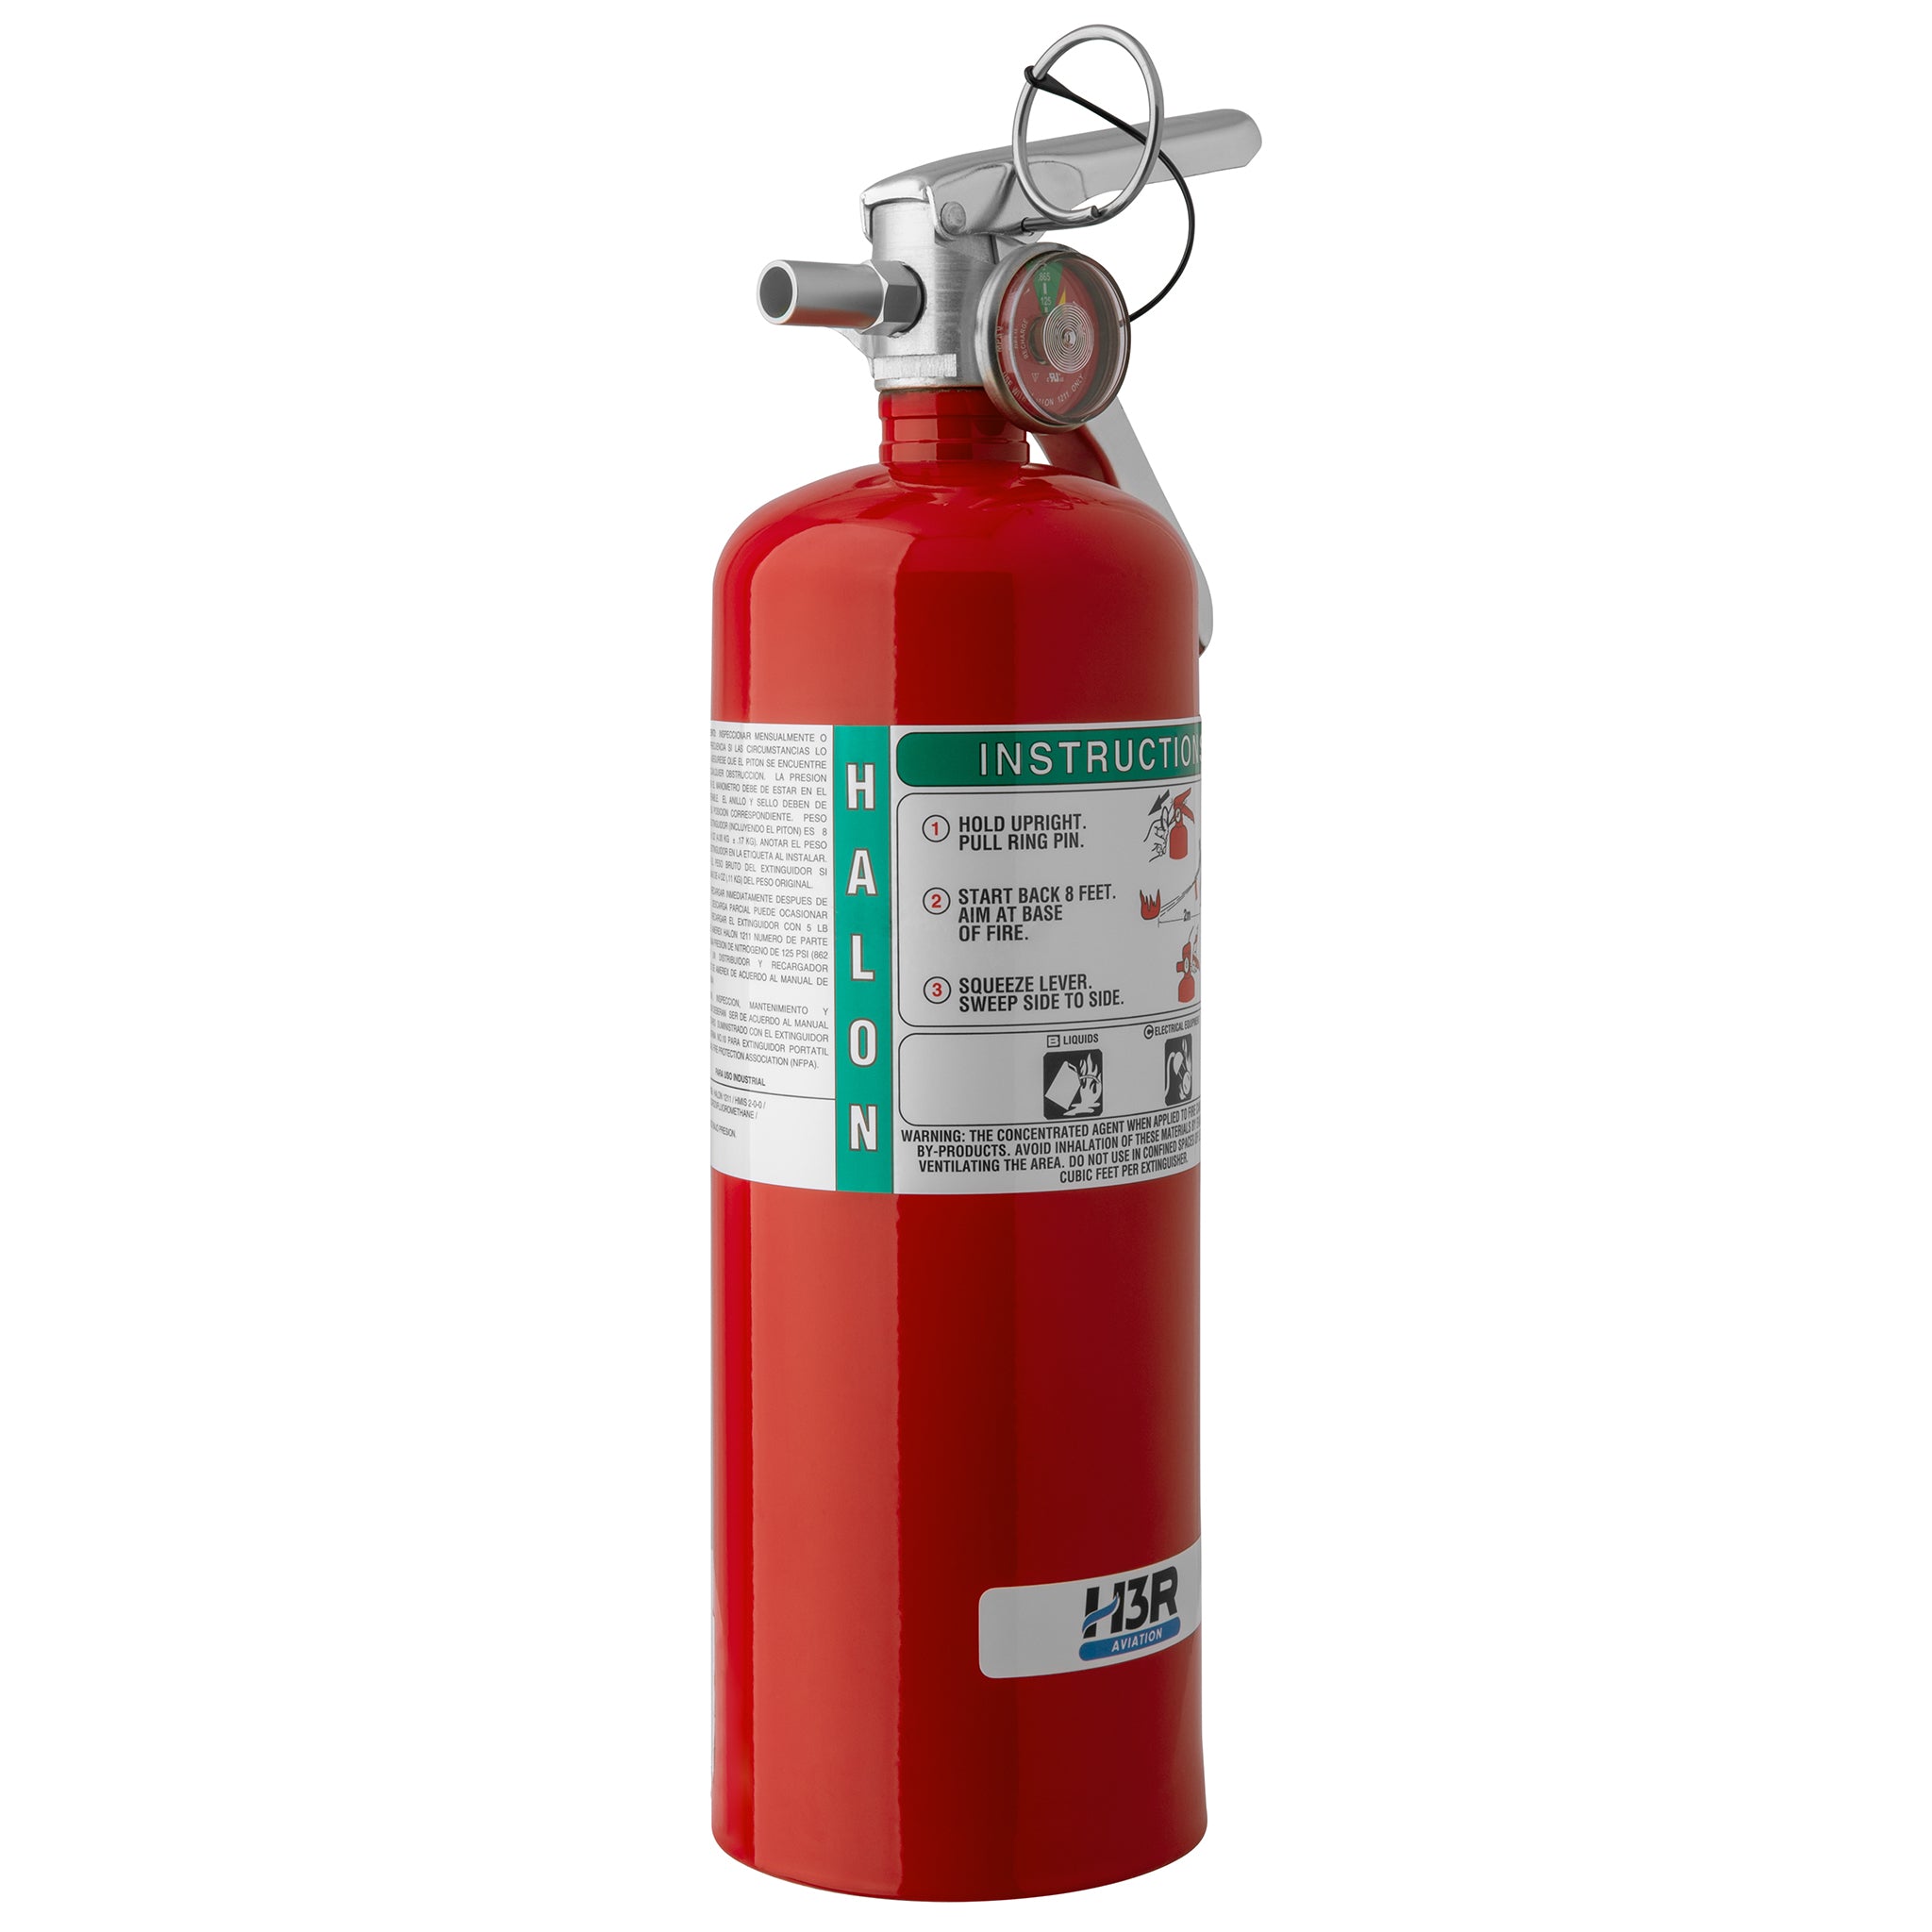 B355T - 5.0 lb. Halon Fire Extinguisher